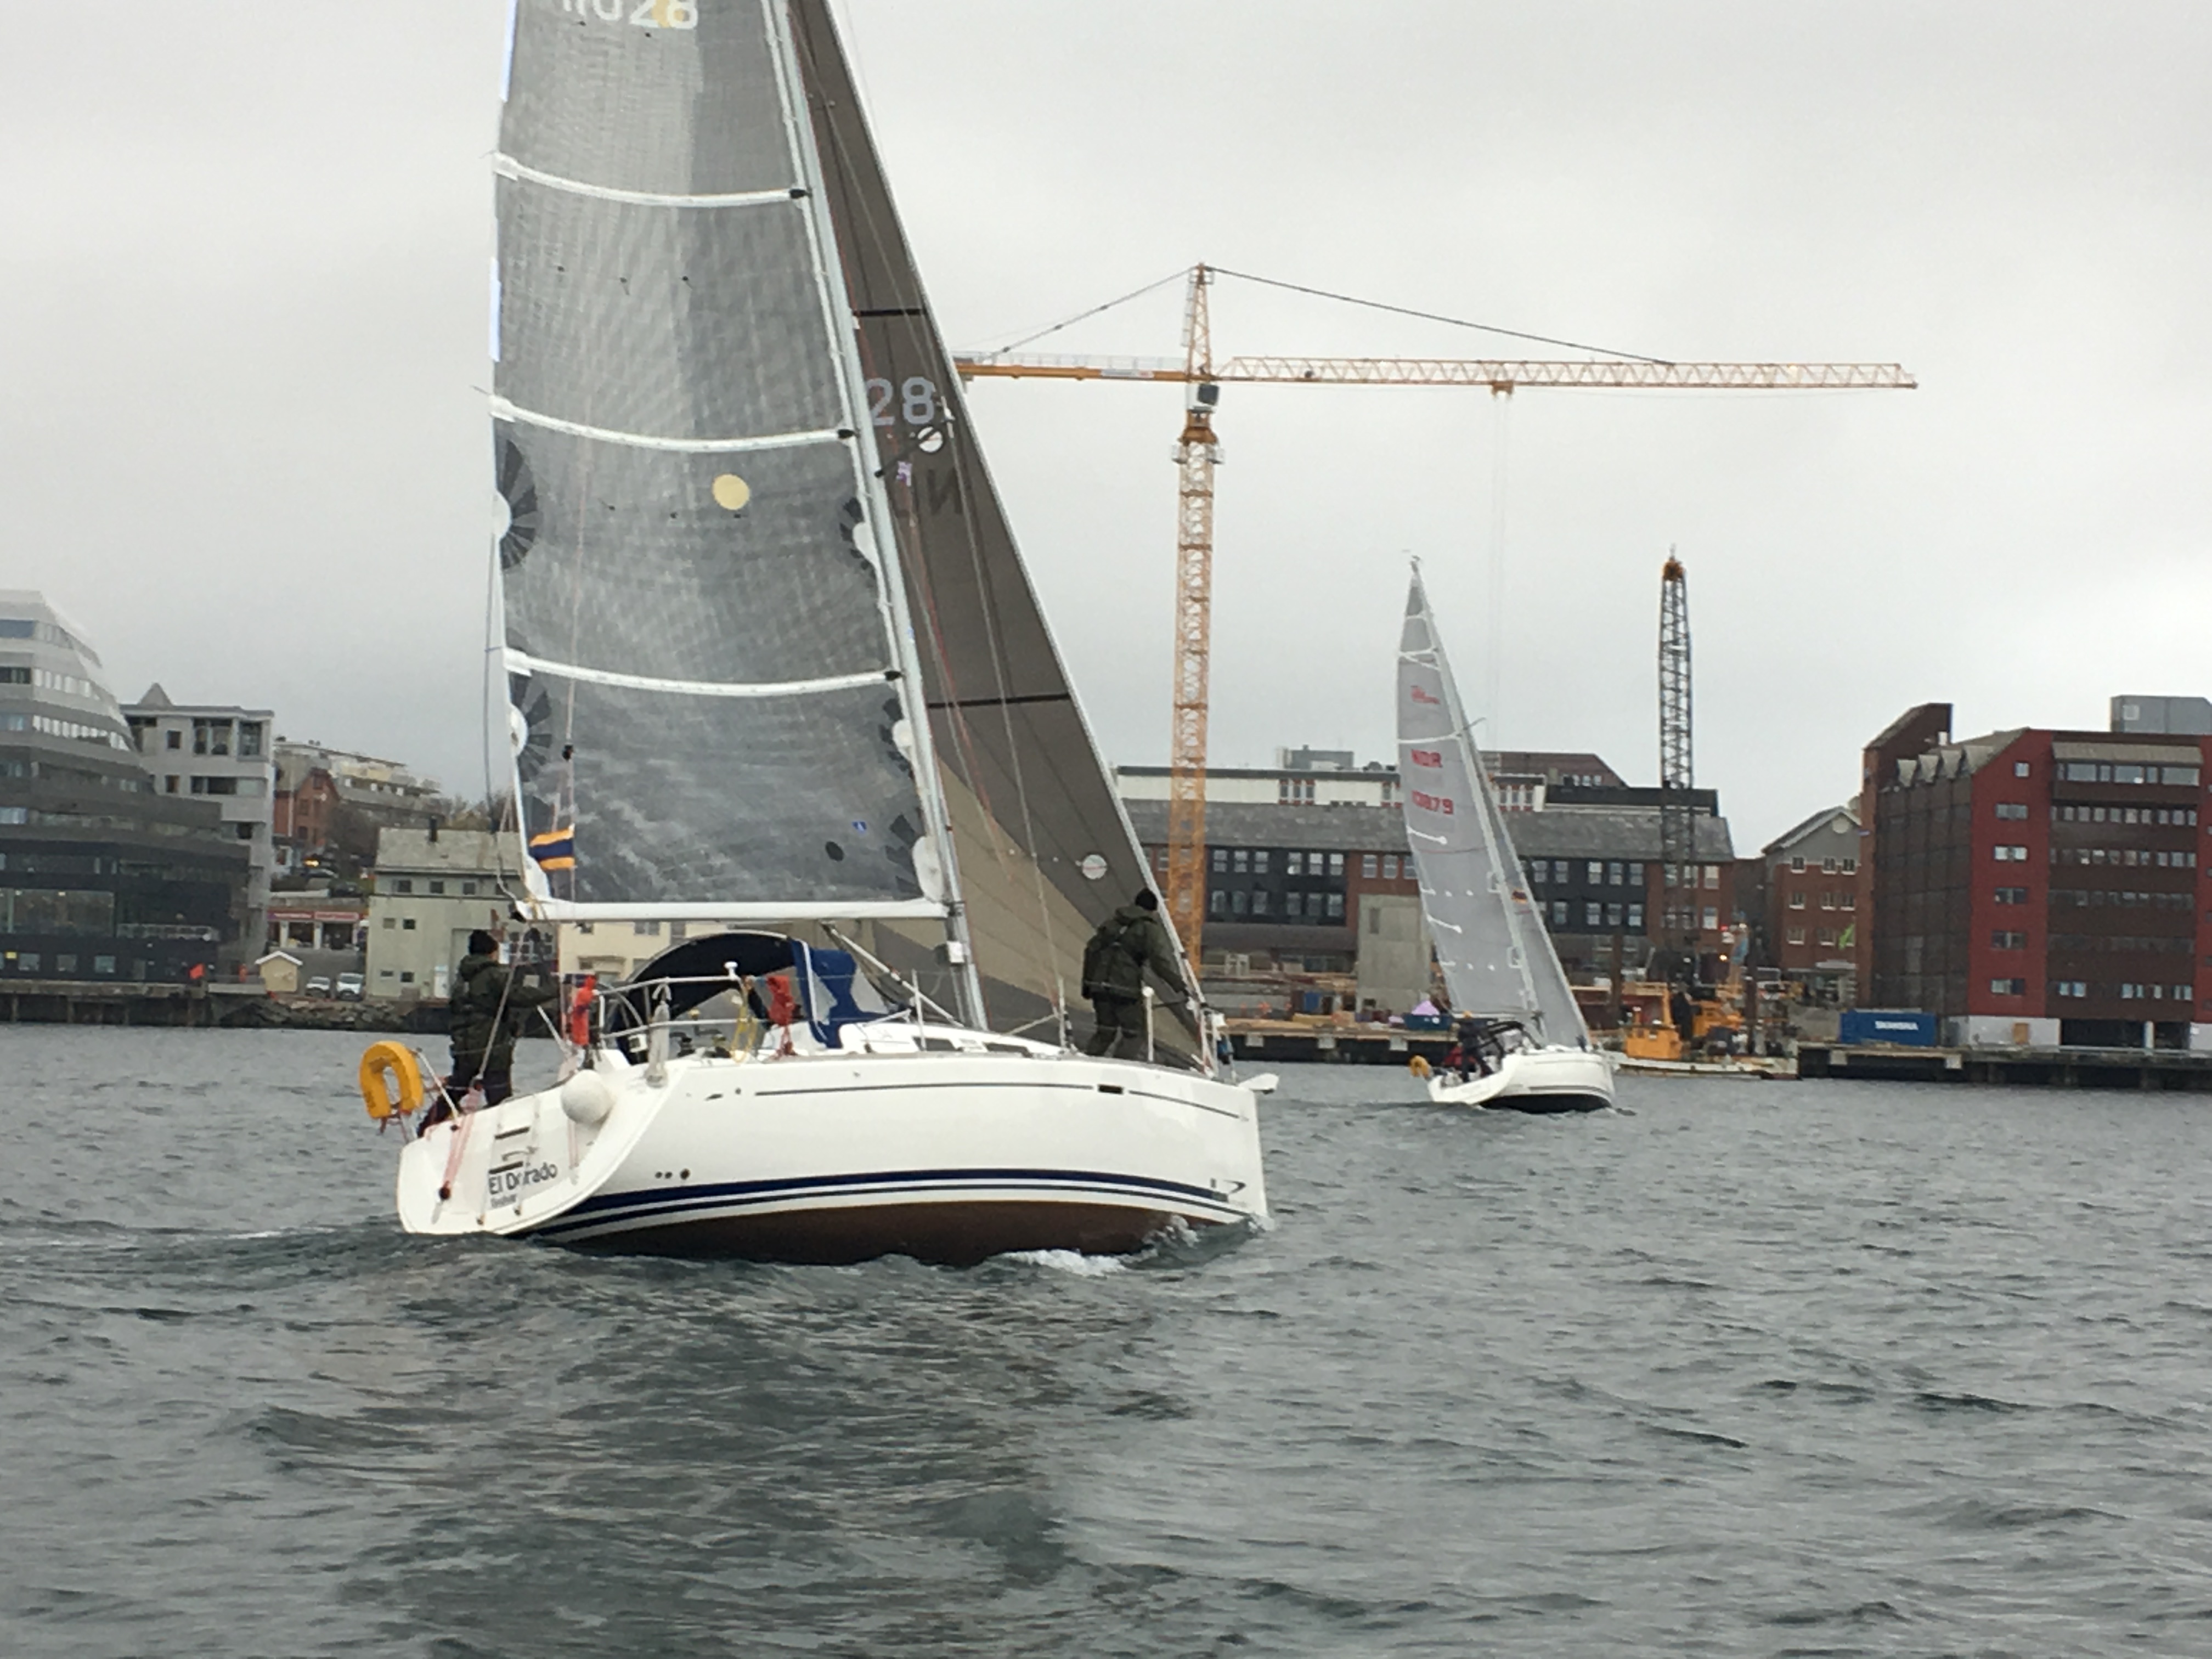 Nordland Offshore Race 2018